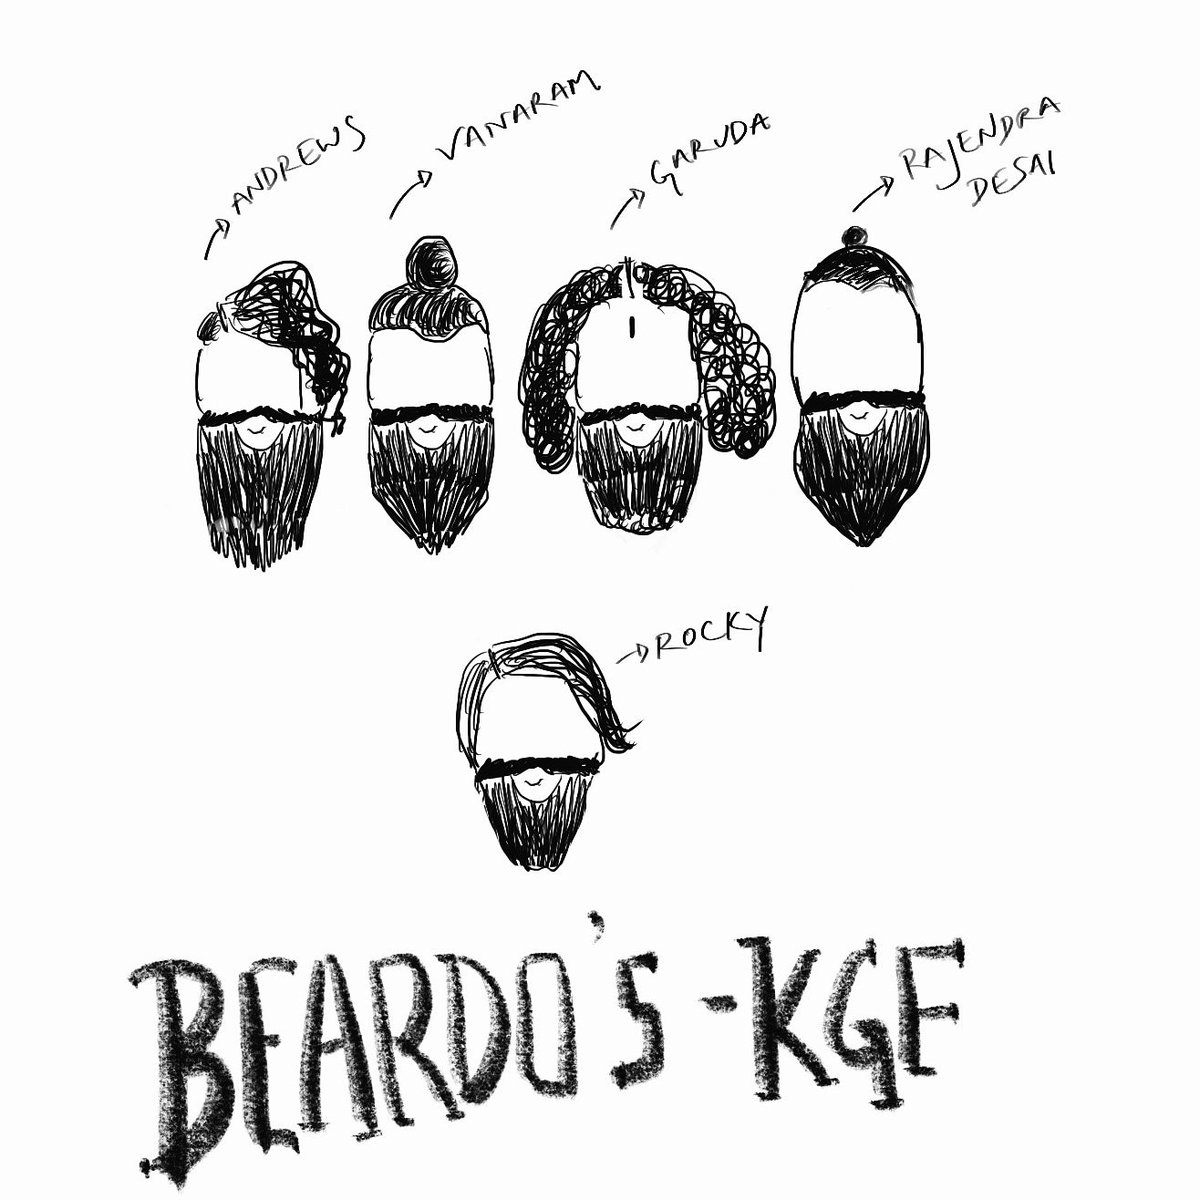 KGF beard and hairstyle | Beard model, Hair and beard styles, Mens  hairstyles with beard